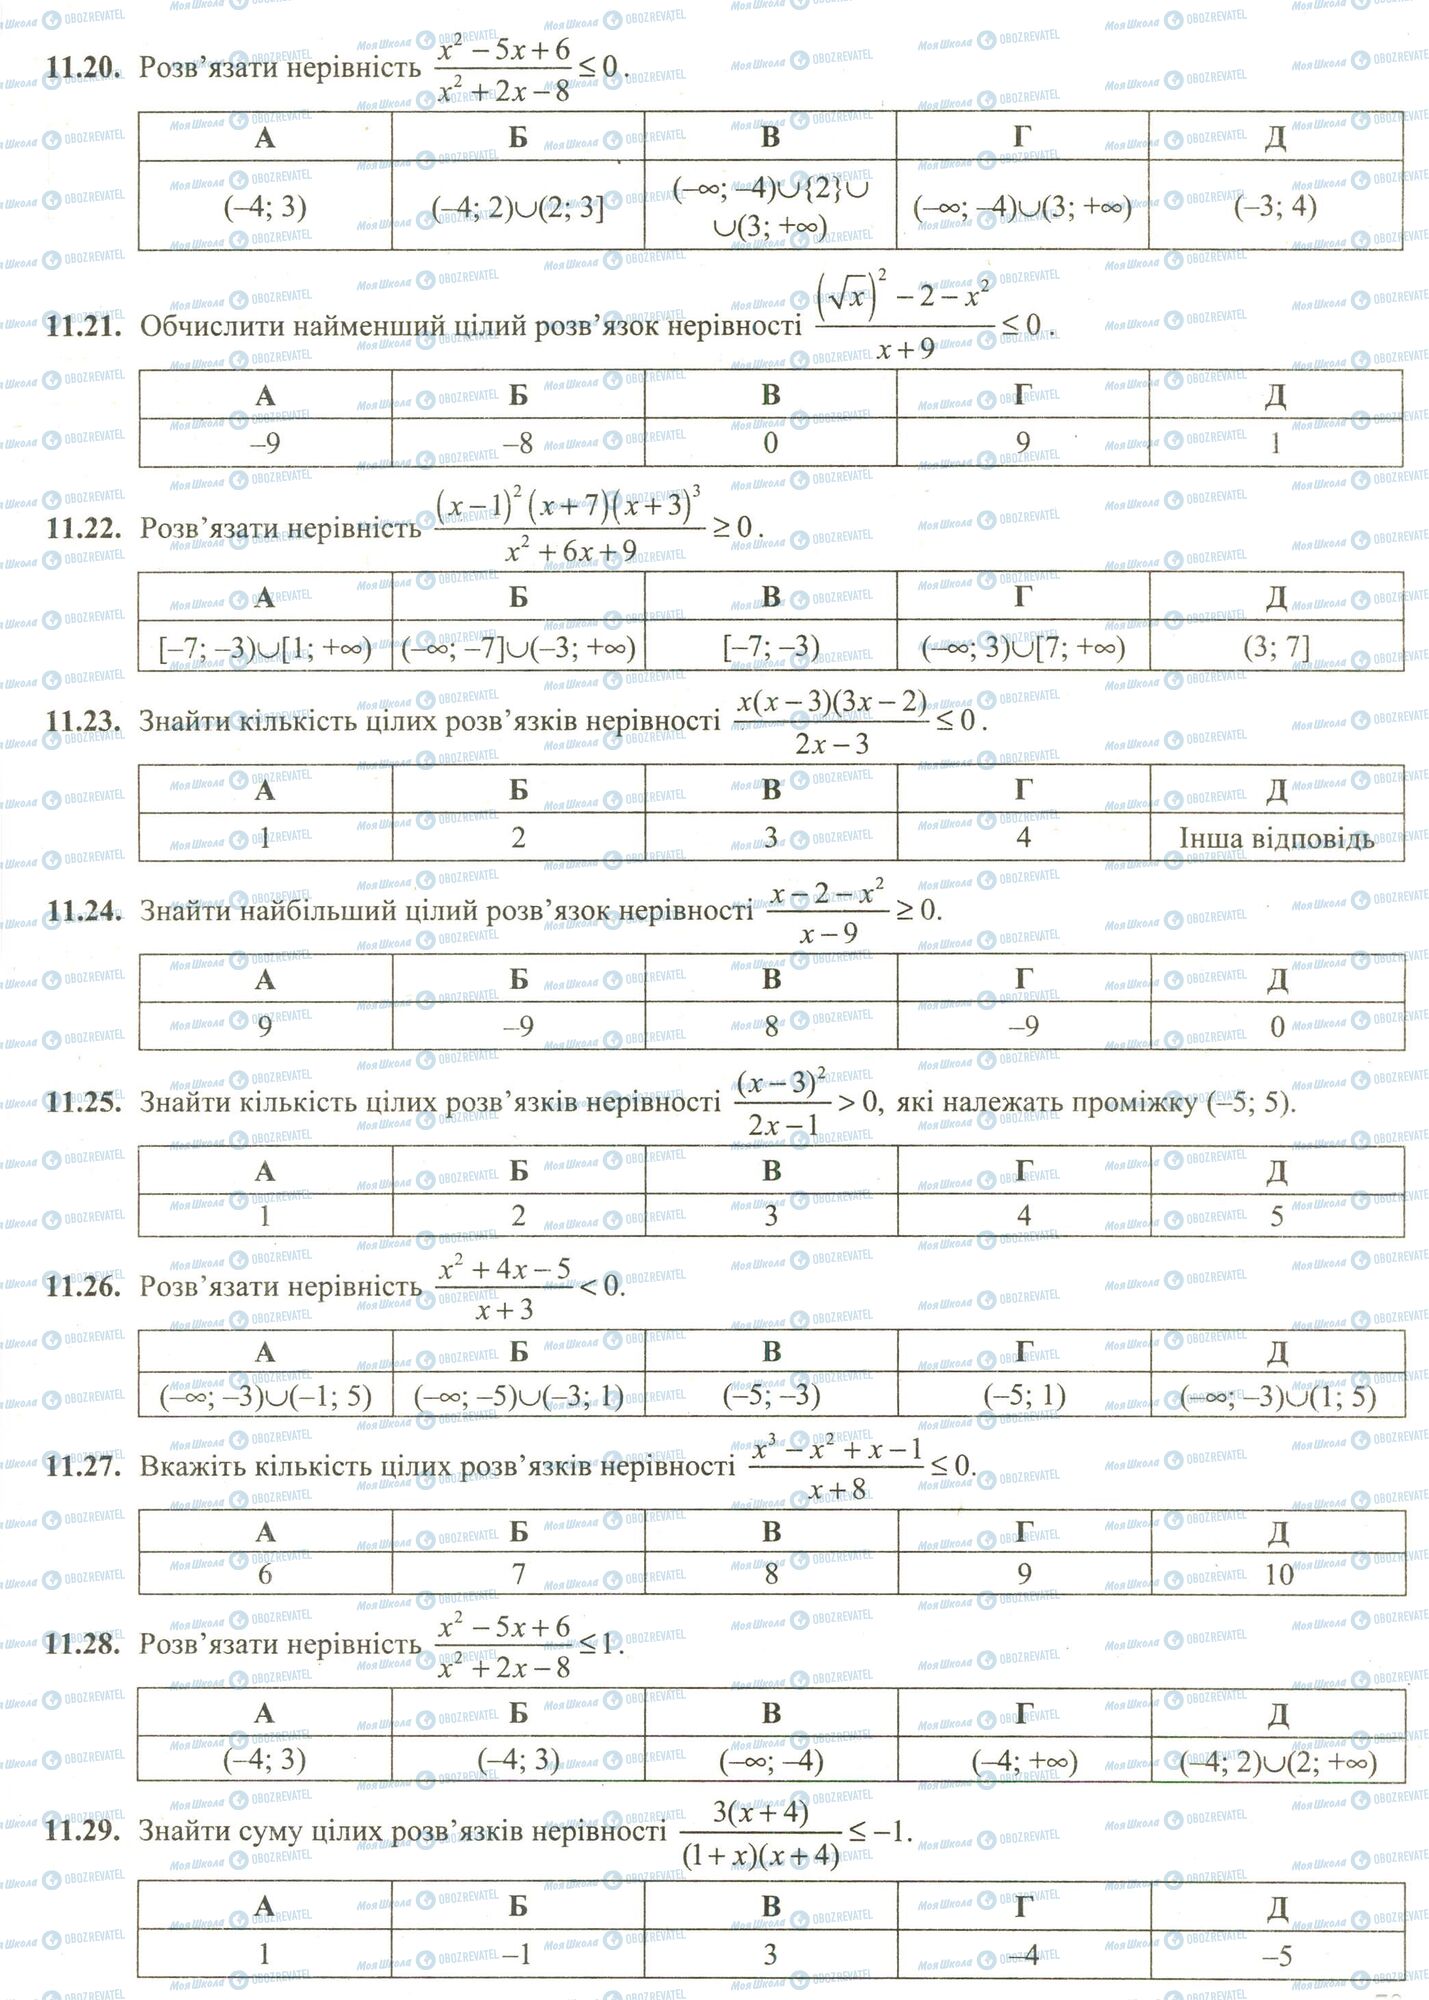 ЗНО Математика 11 класс страница 20-29